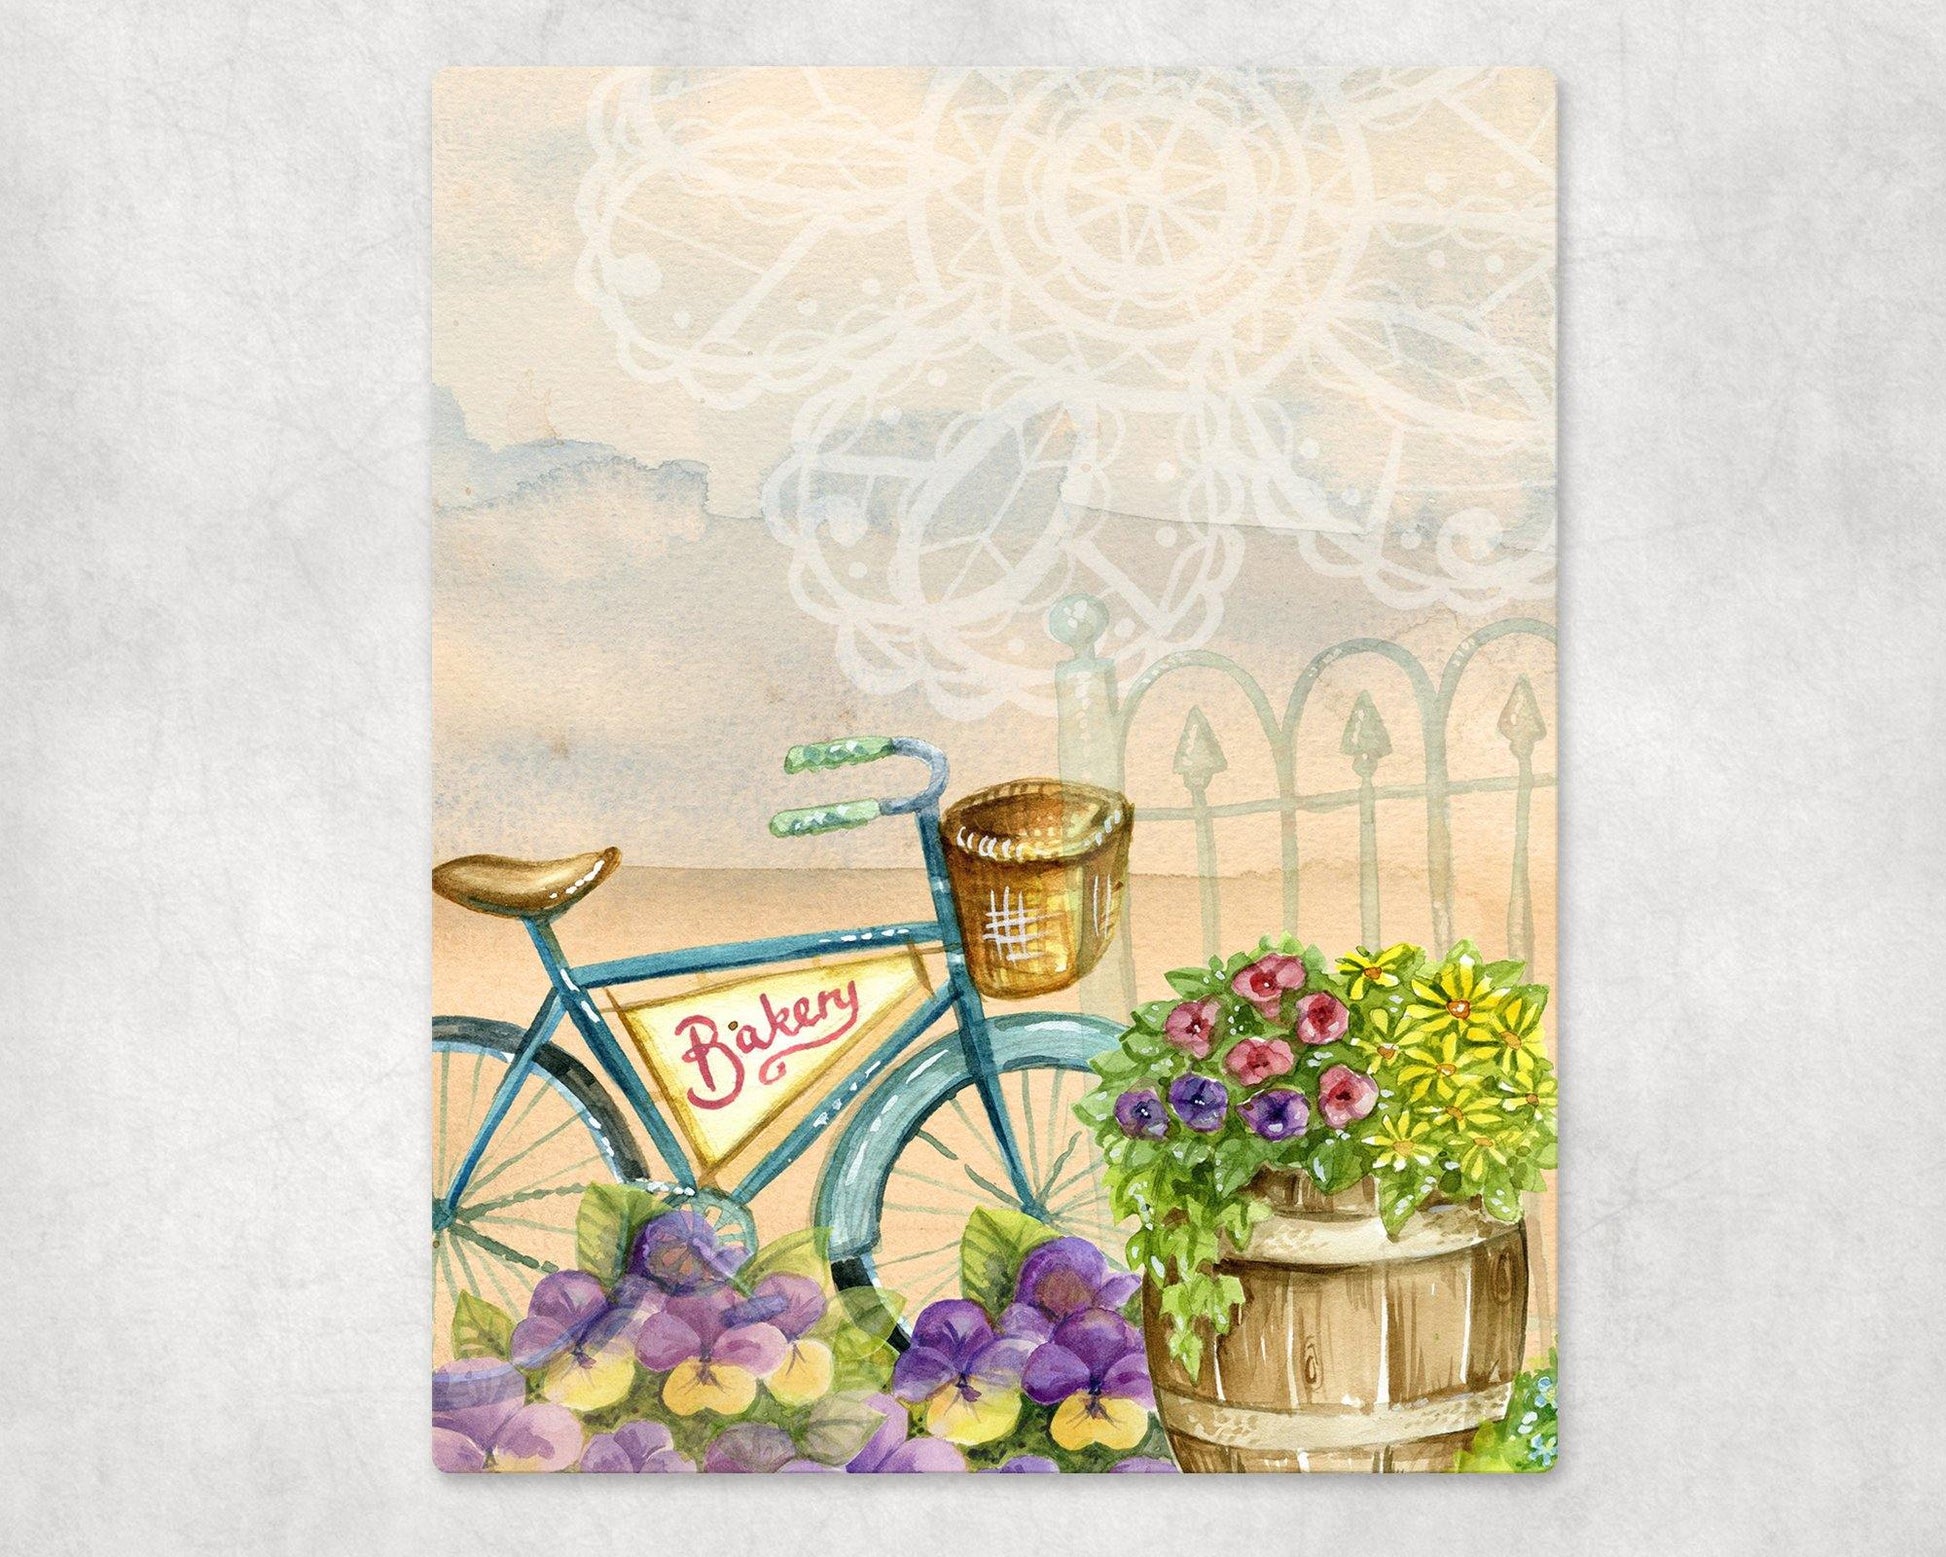 Vintage Bicycle & Flowers Art Metal Photo Panel - 8x10 - Schoppix Gifts